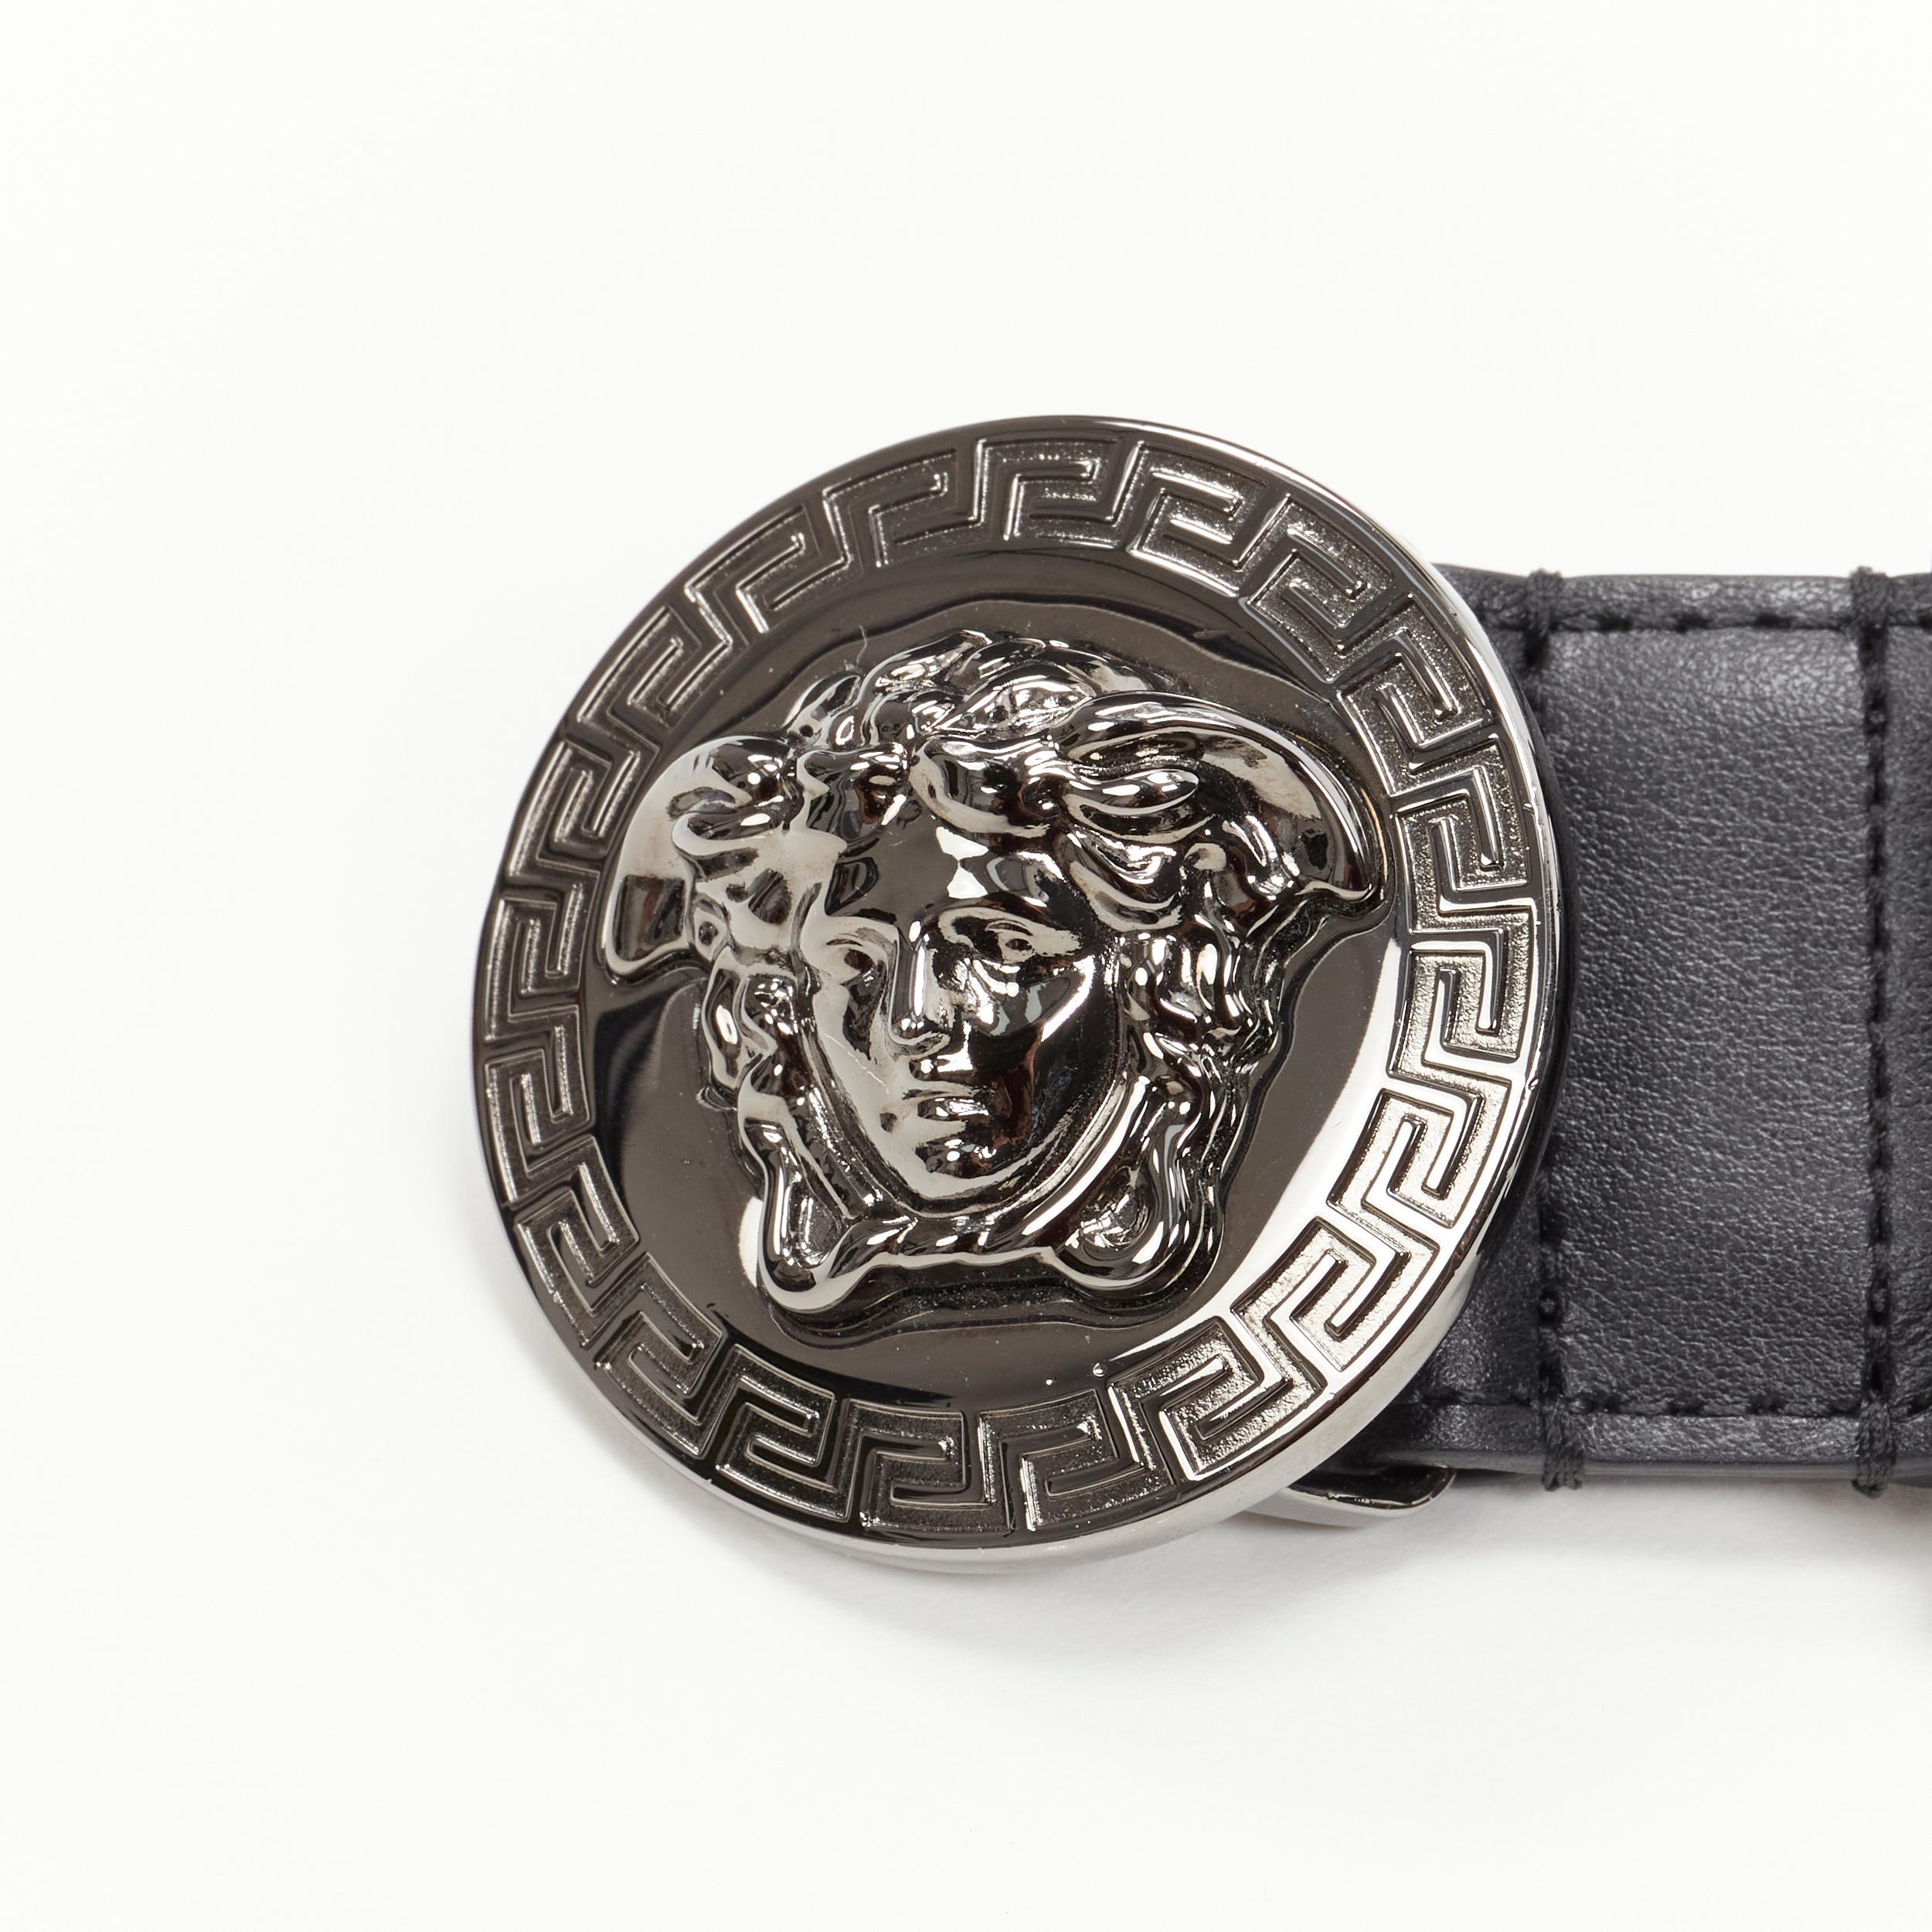 Black new VERSACE Medusa Medallion Coin silver buckle black leather belt 115cm 44-48